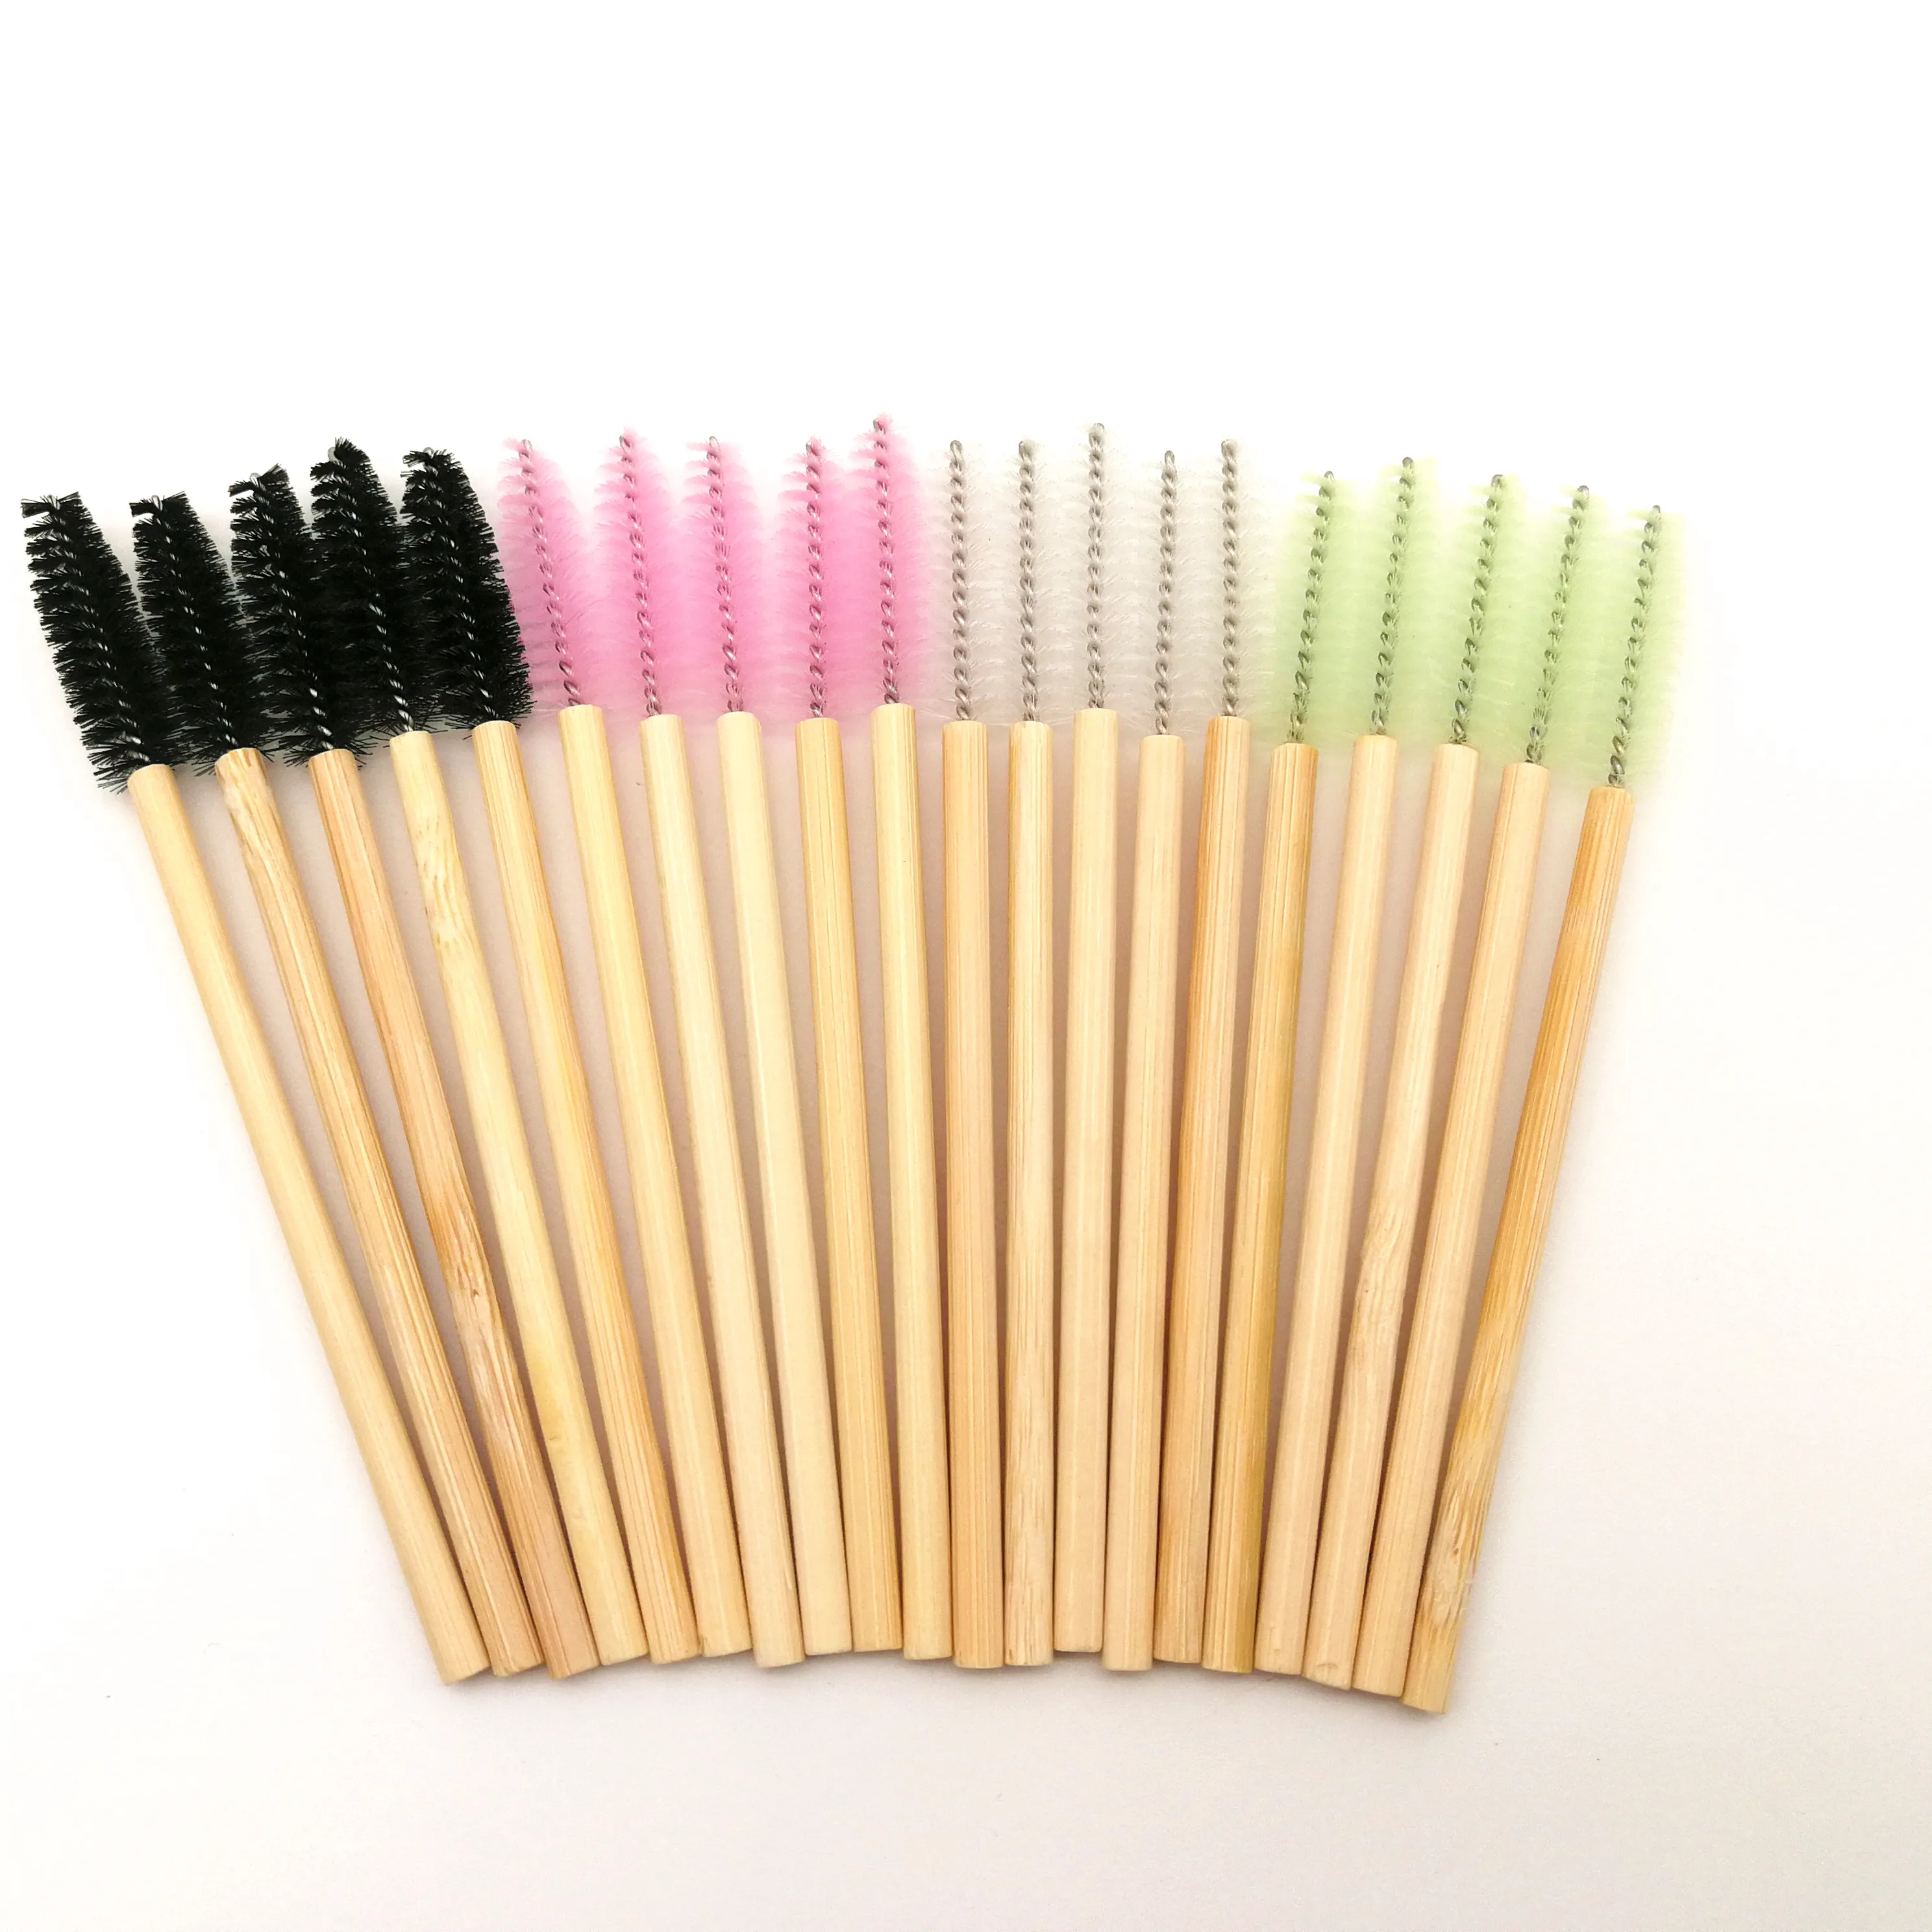 Disposable bamboo eyelash makeup mascara wand lash brush tools applicator spoolies, Black, white,light green,light pink